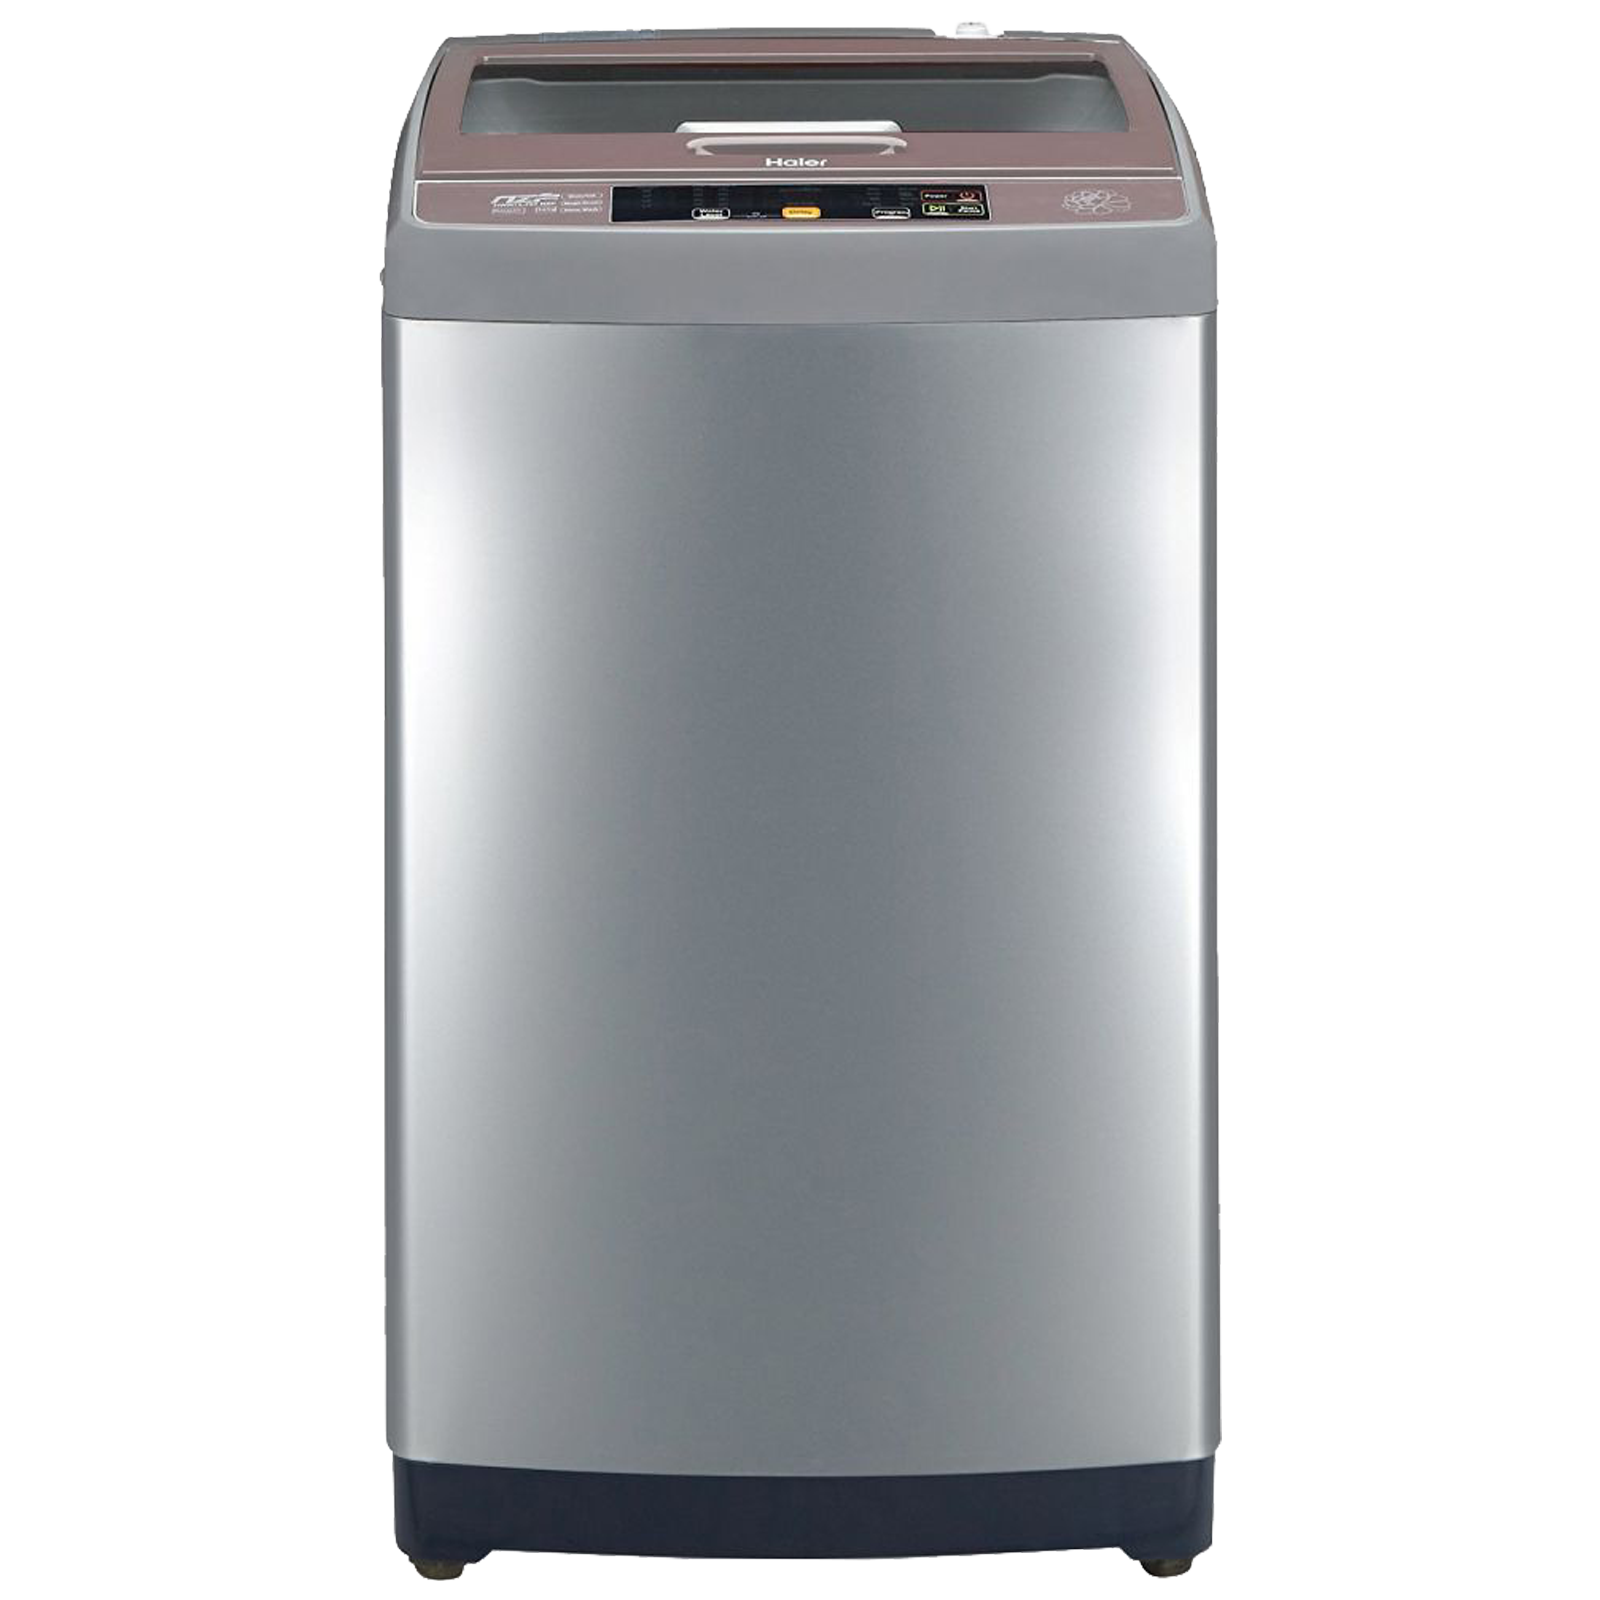 Haier 7.5 kg Fully Automatic Top Load Washing Machine (Softfall Technology, HWM75708NZP, Silver Grey)_1